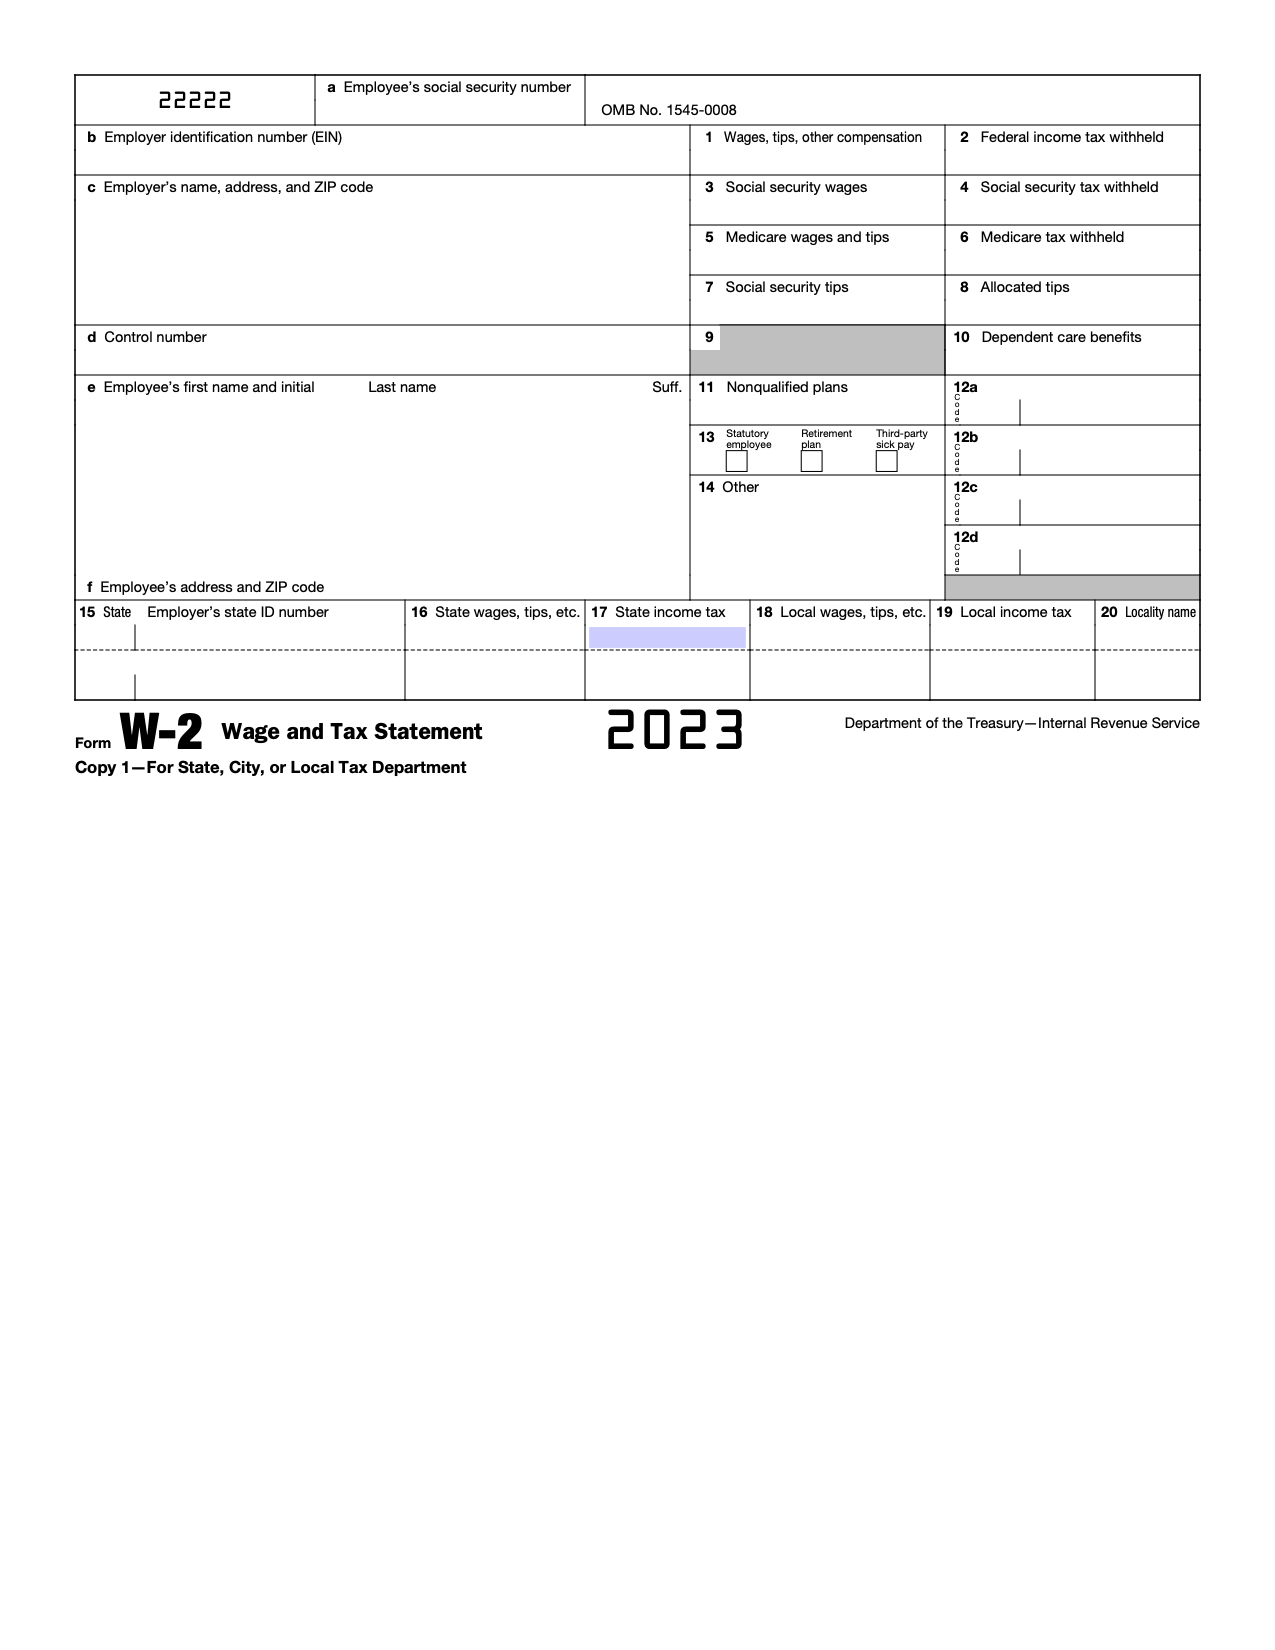 Free Irs Form W-2 | Wage And Tax Statement - Pdf – Eforms regarding W2 Download Form